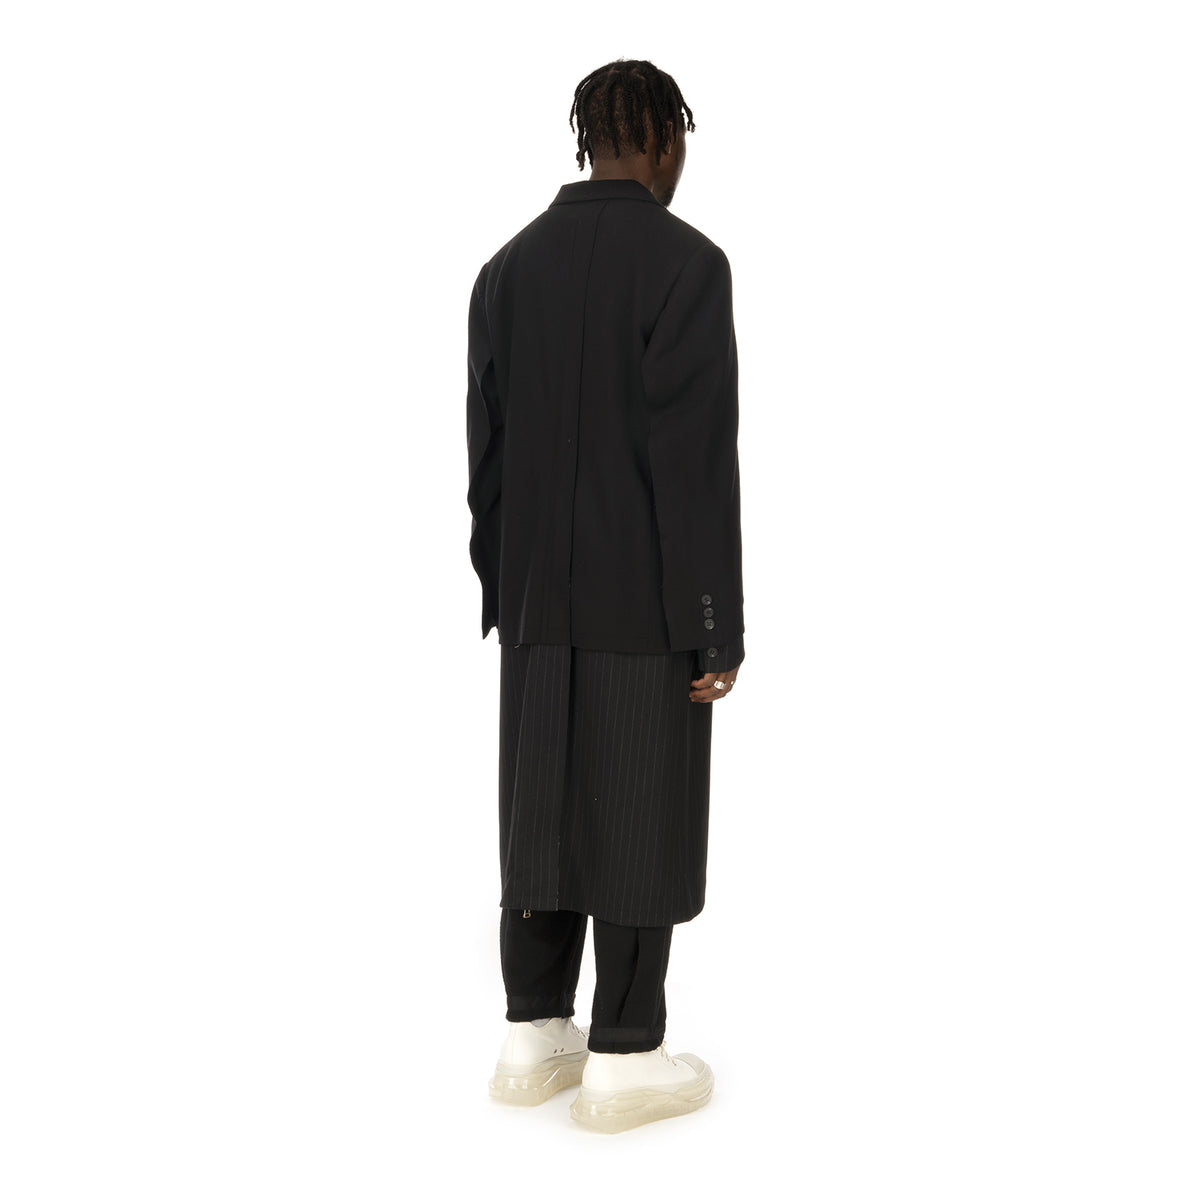 asparagus_ | Jacket Layered Coat Black - Concrete